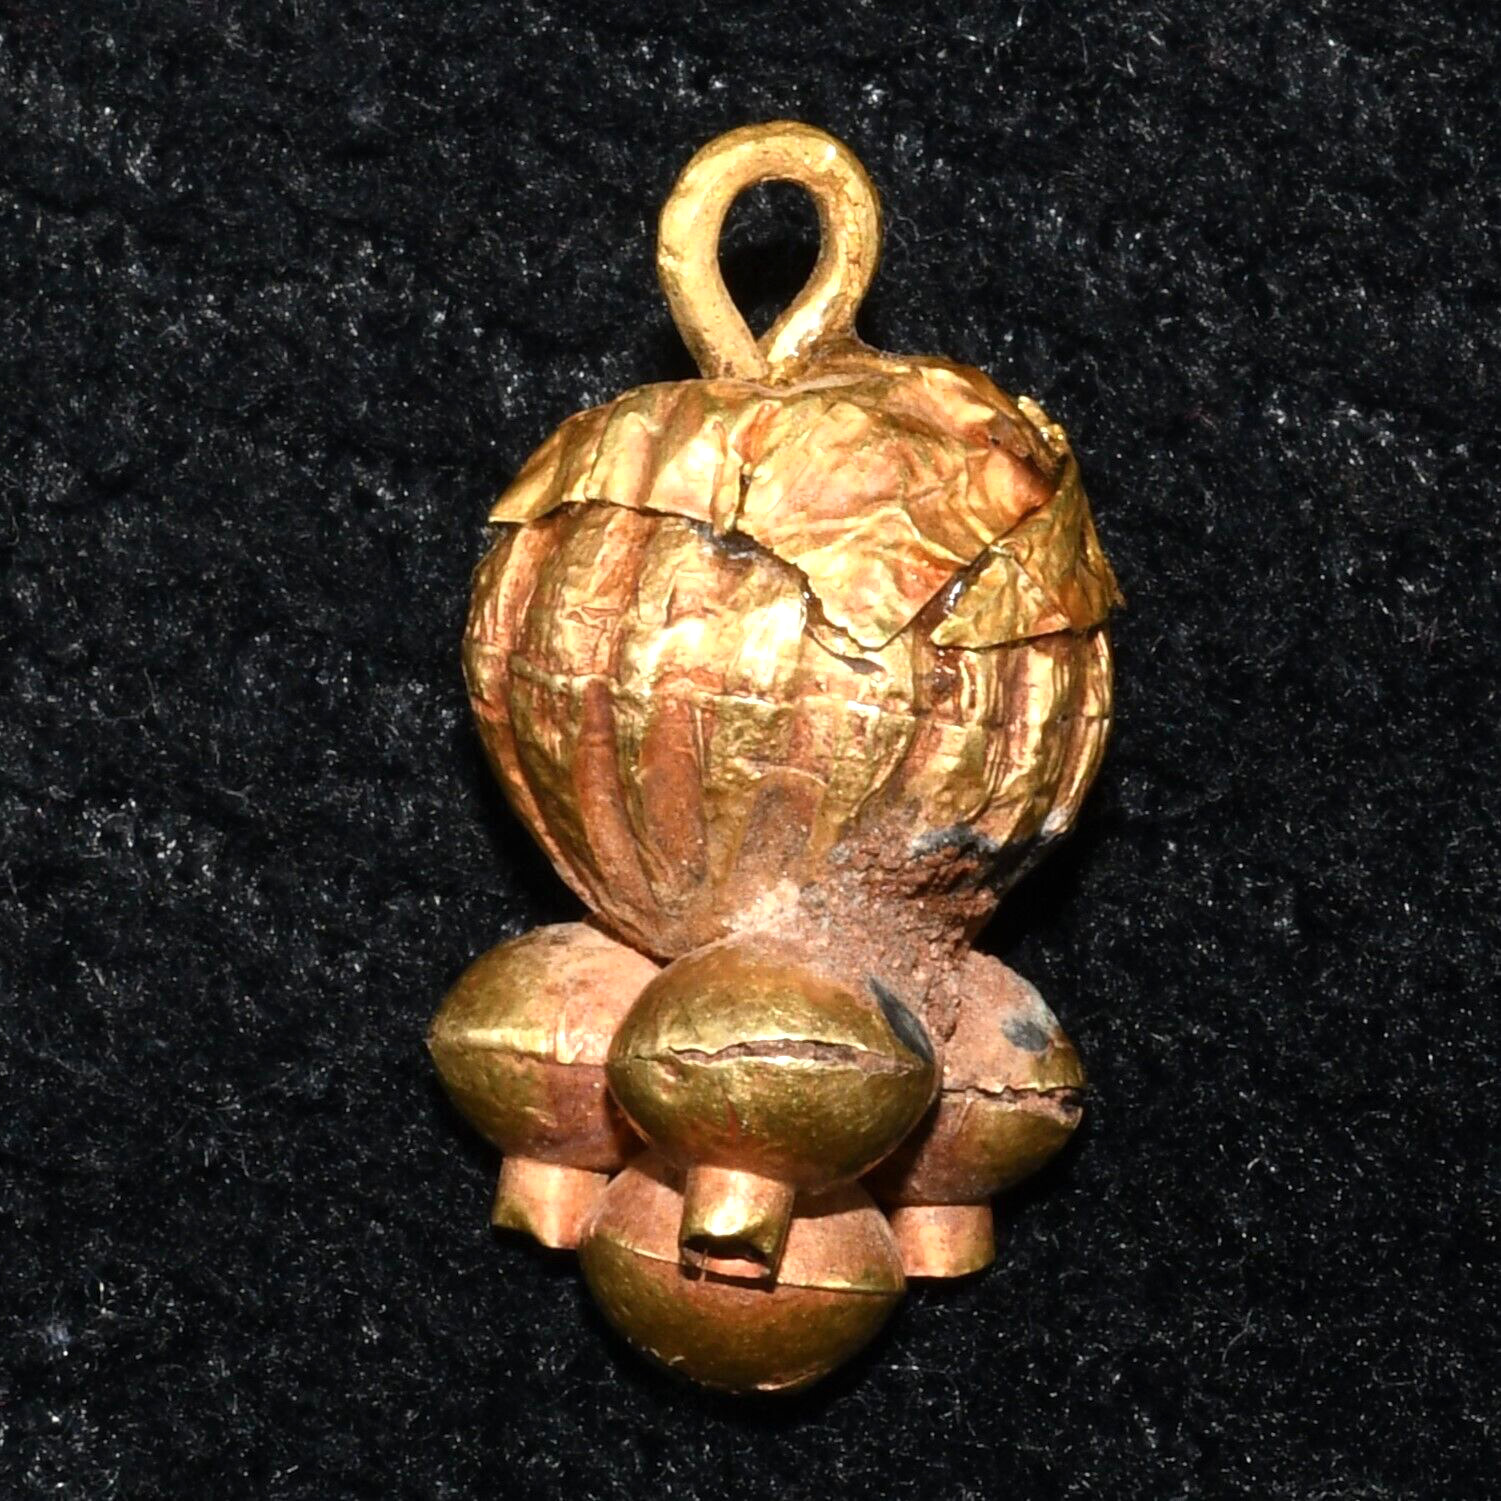 Genuine Ancient Roman Gold Pendant with Grape Cluster Design Ca. 1st Century AD